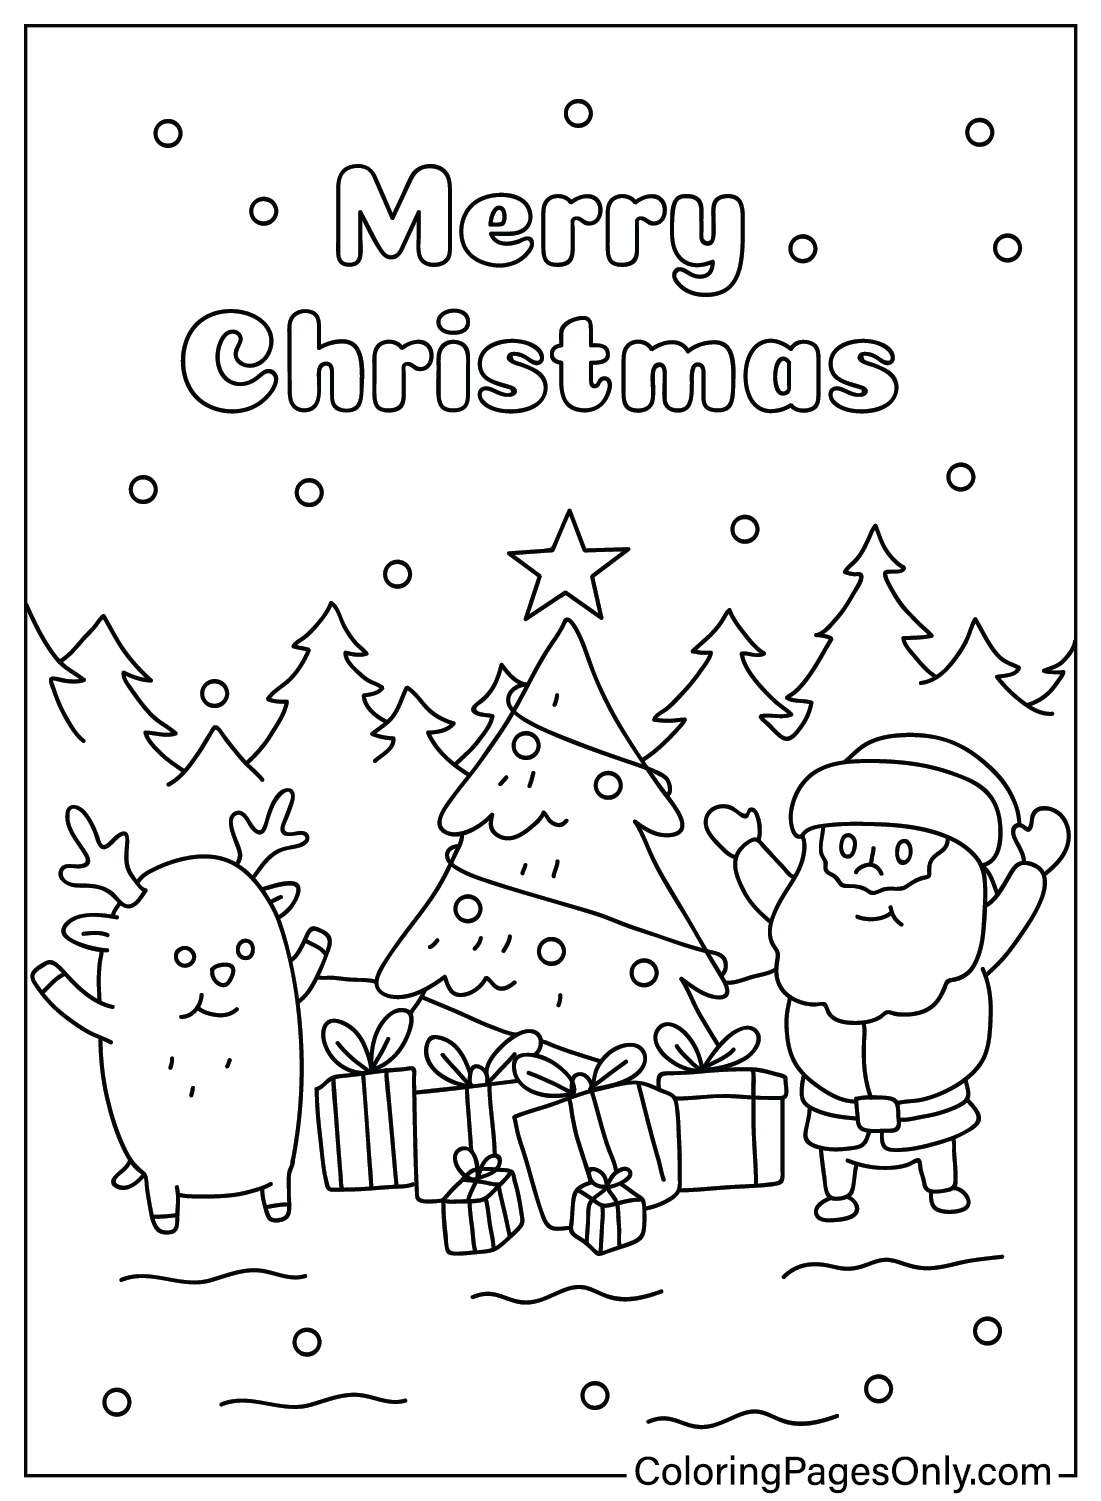 Christmas Tree and Santa Claus Coloring Page